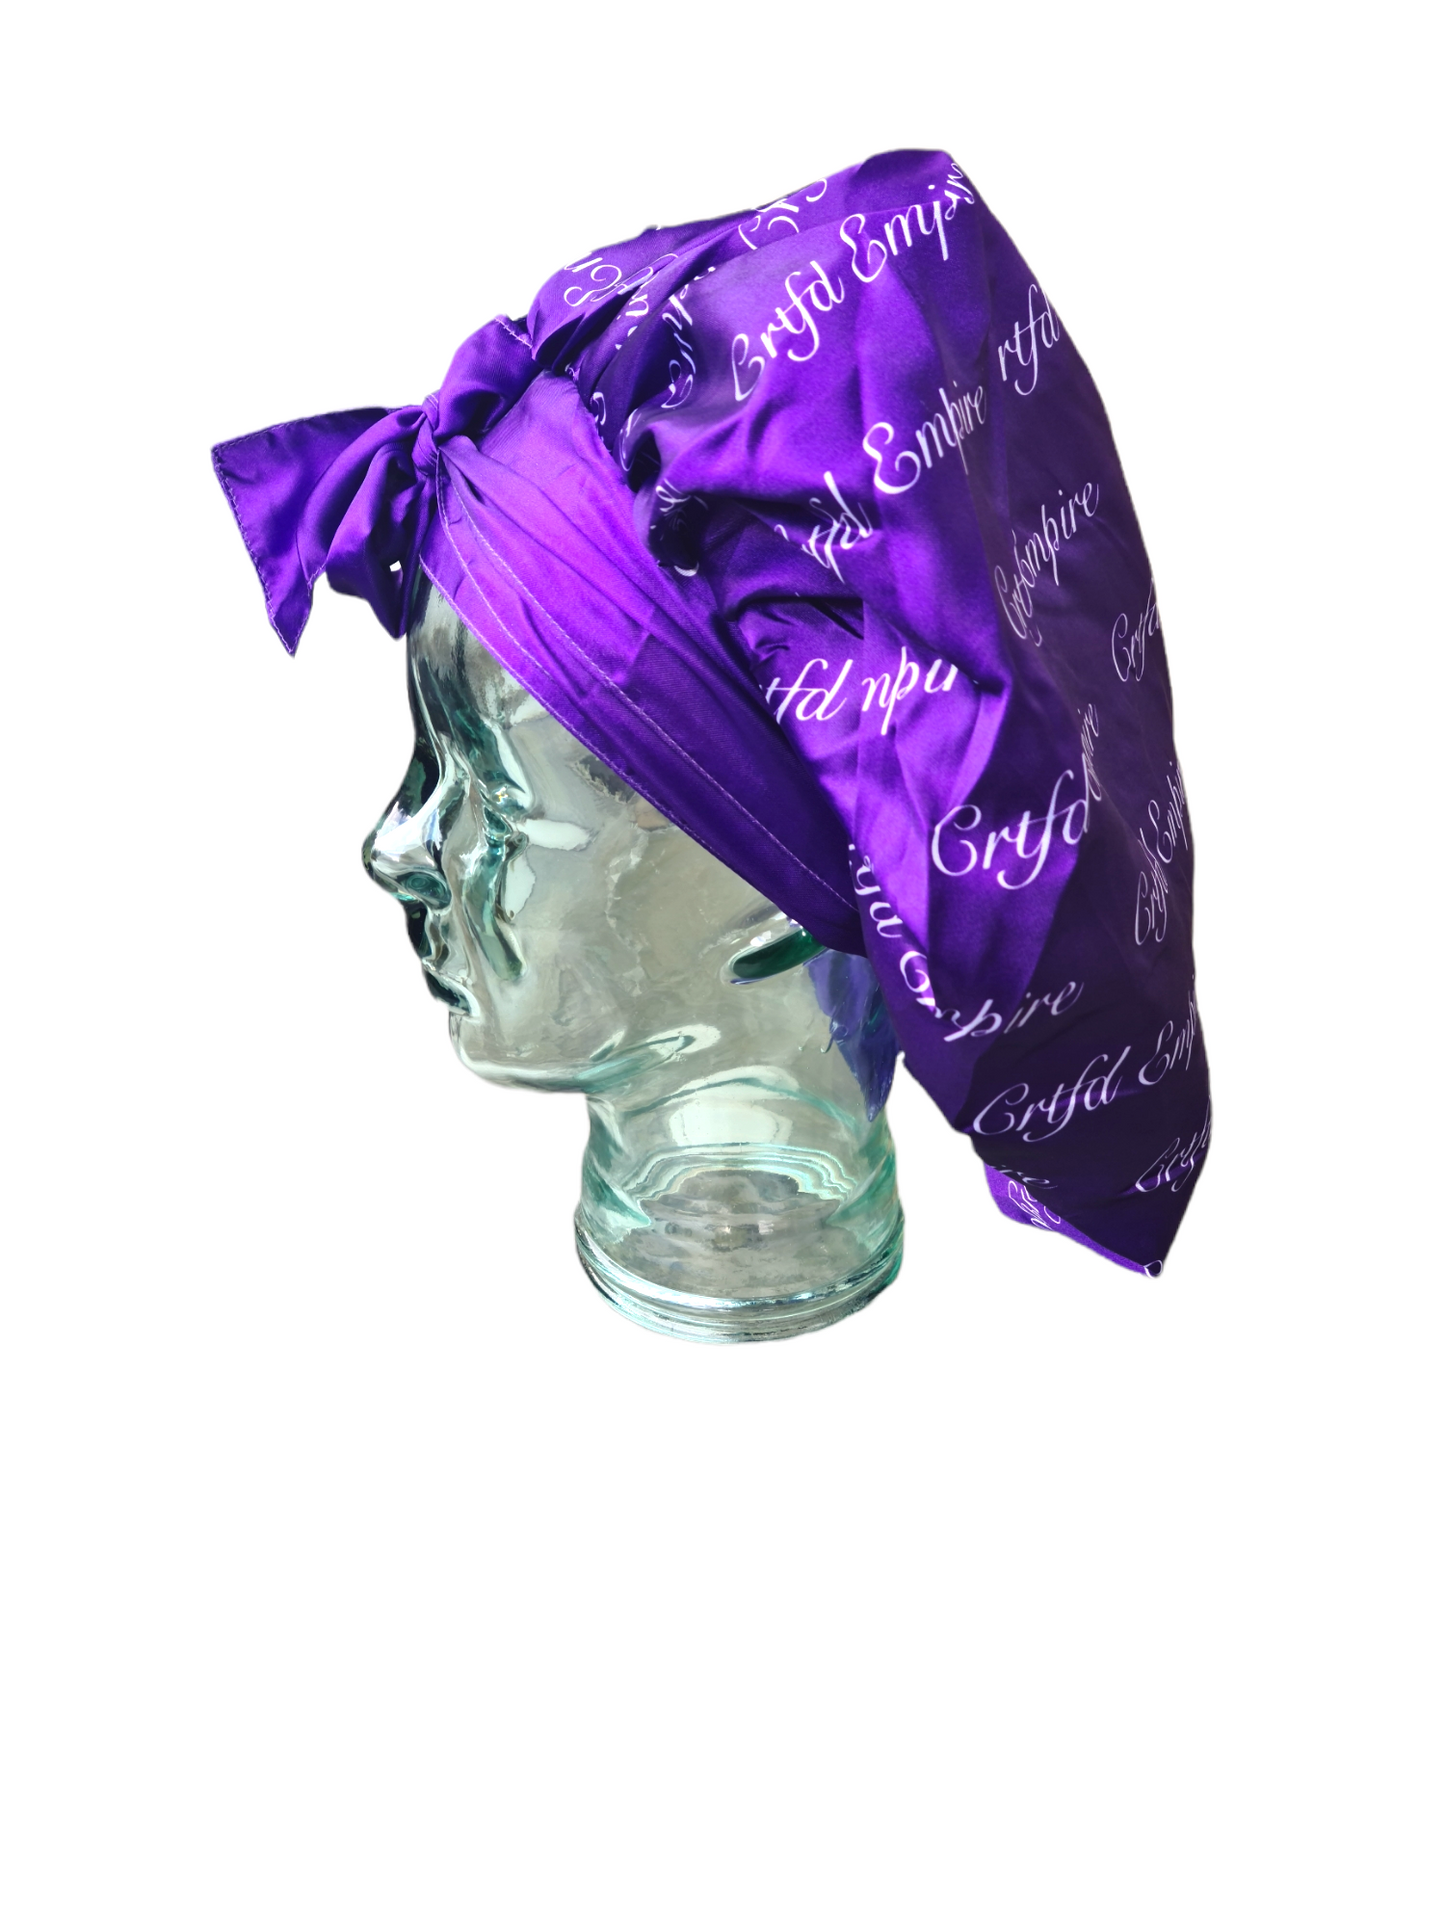 Crtfd Empire, Purple & White Satin Bonnet with tie